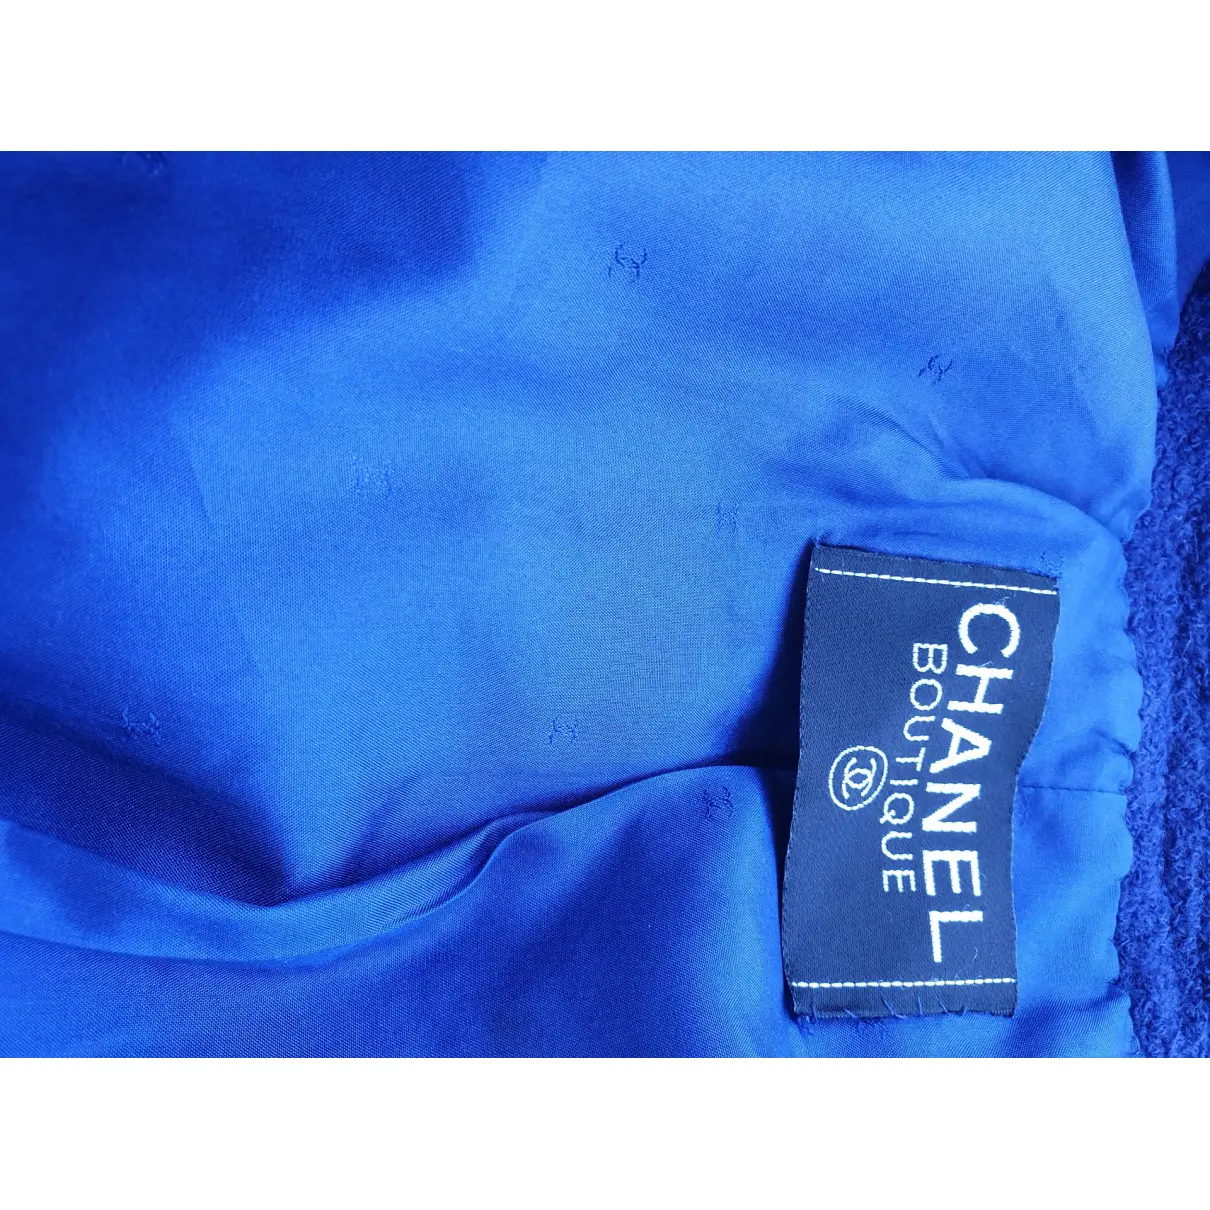 Wool suit jacket Chanel - Vintage